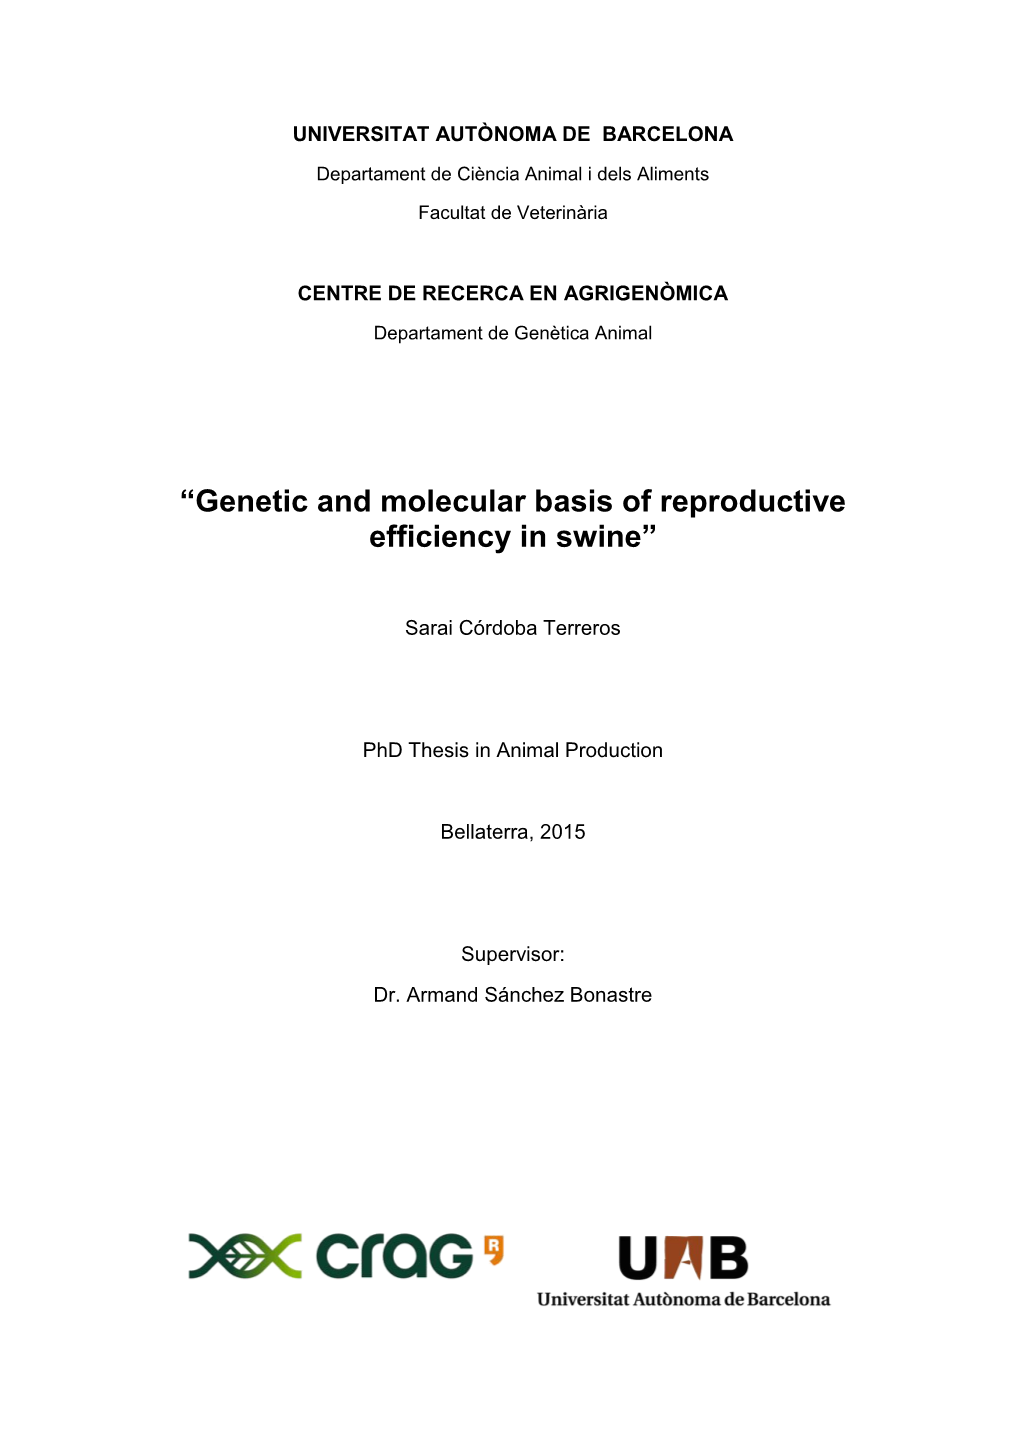 “Genetic and Molecular Basis of Reproductive Efficiency in Swine”